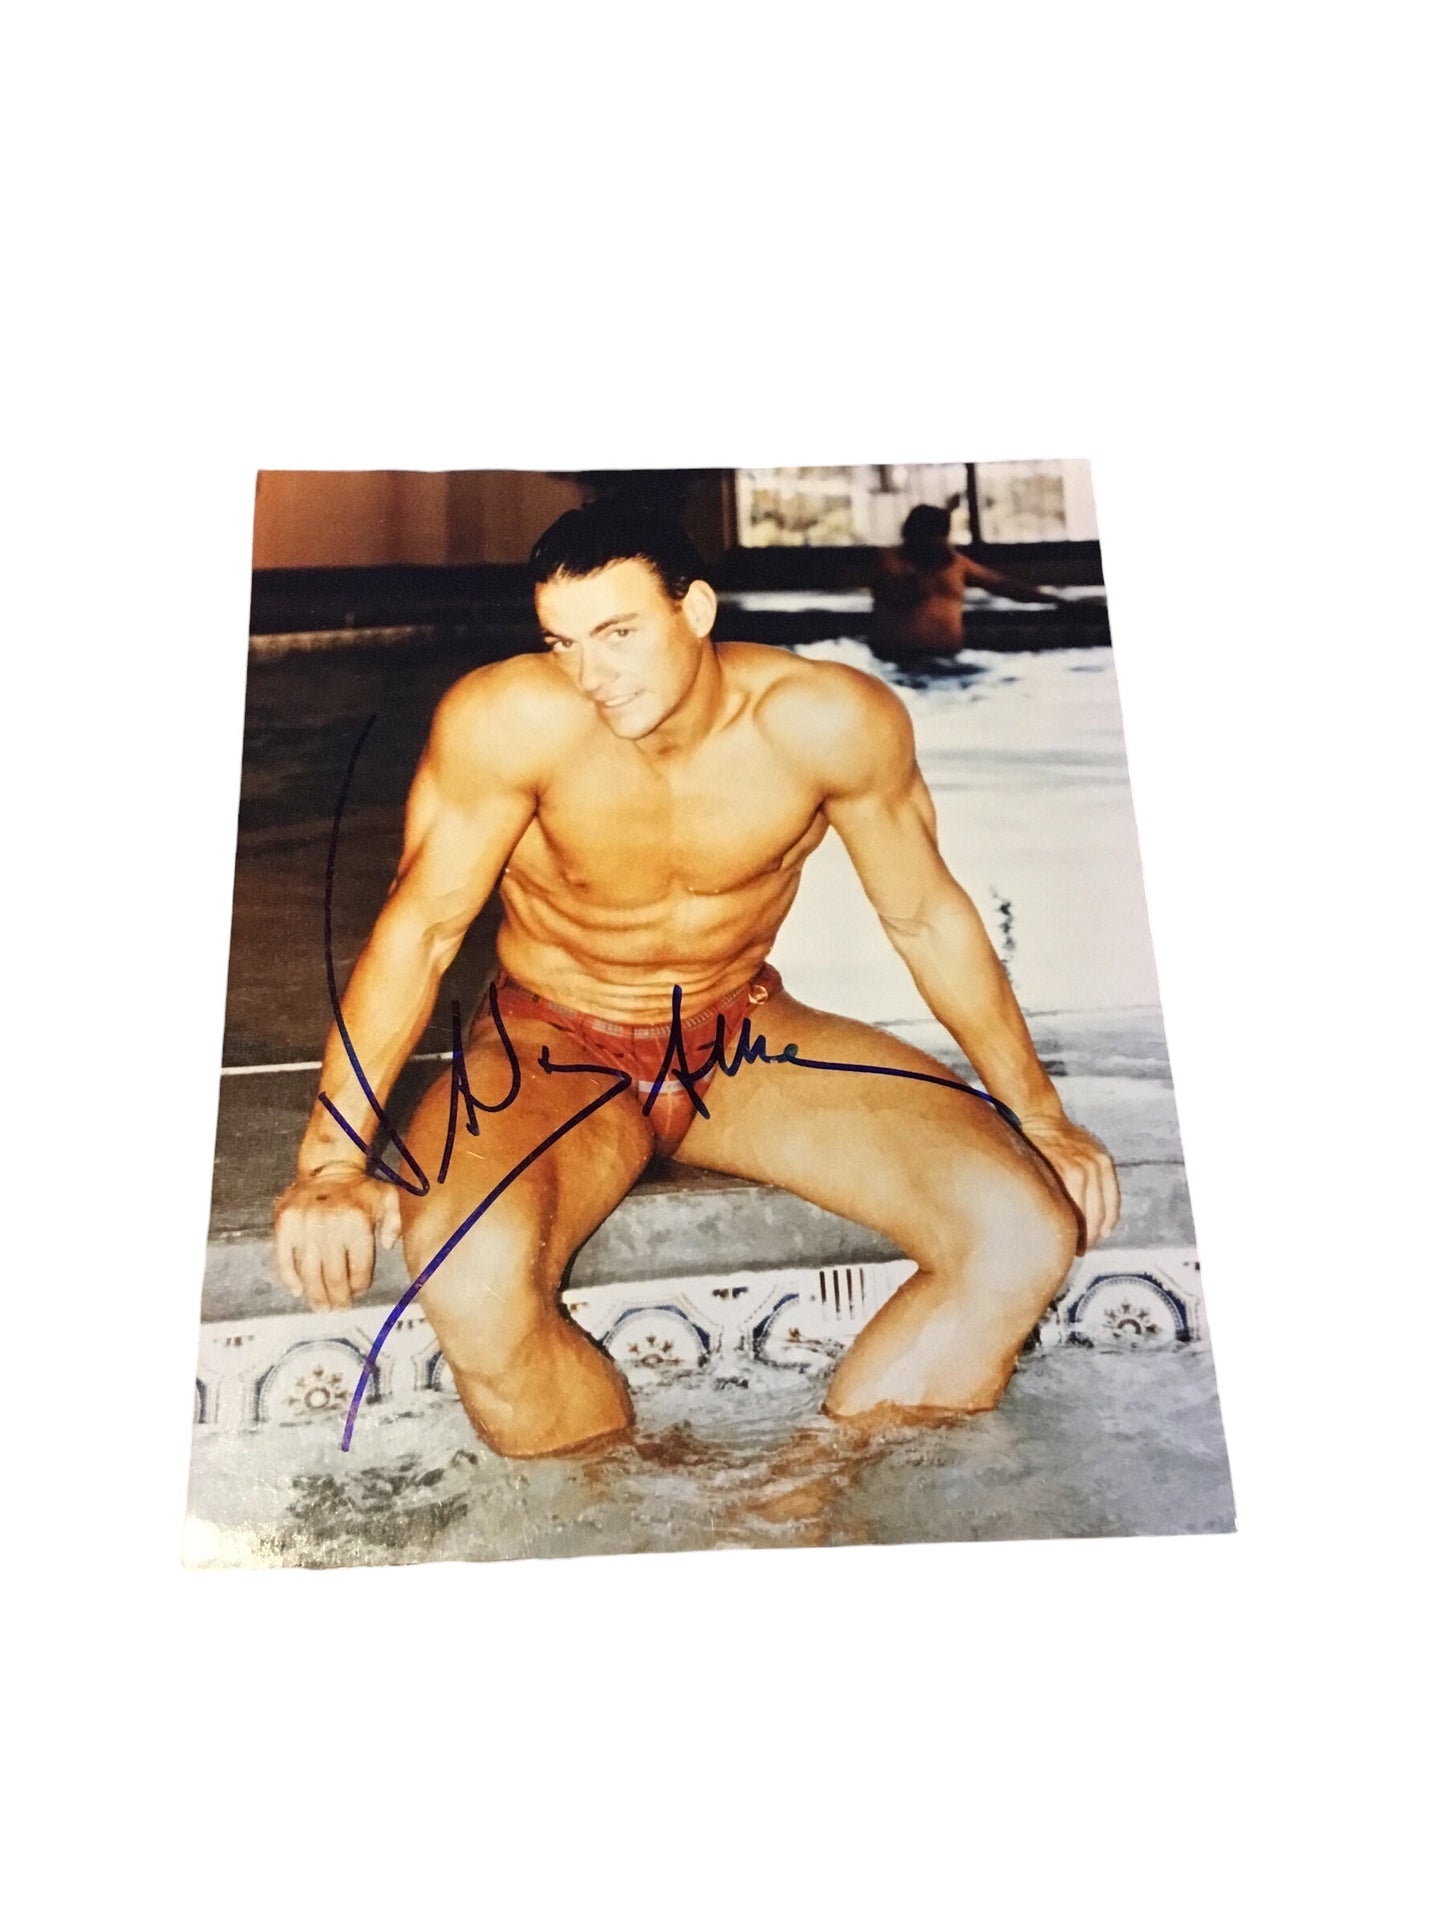 Jean Claude Van Damme Rare Autographed Photograph PSA Certified 8x10